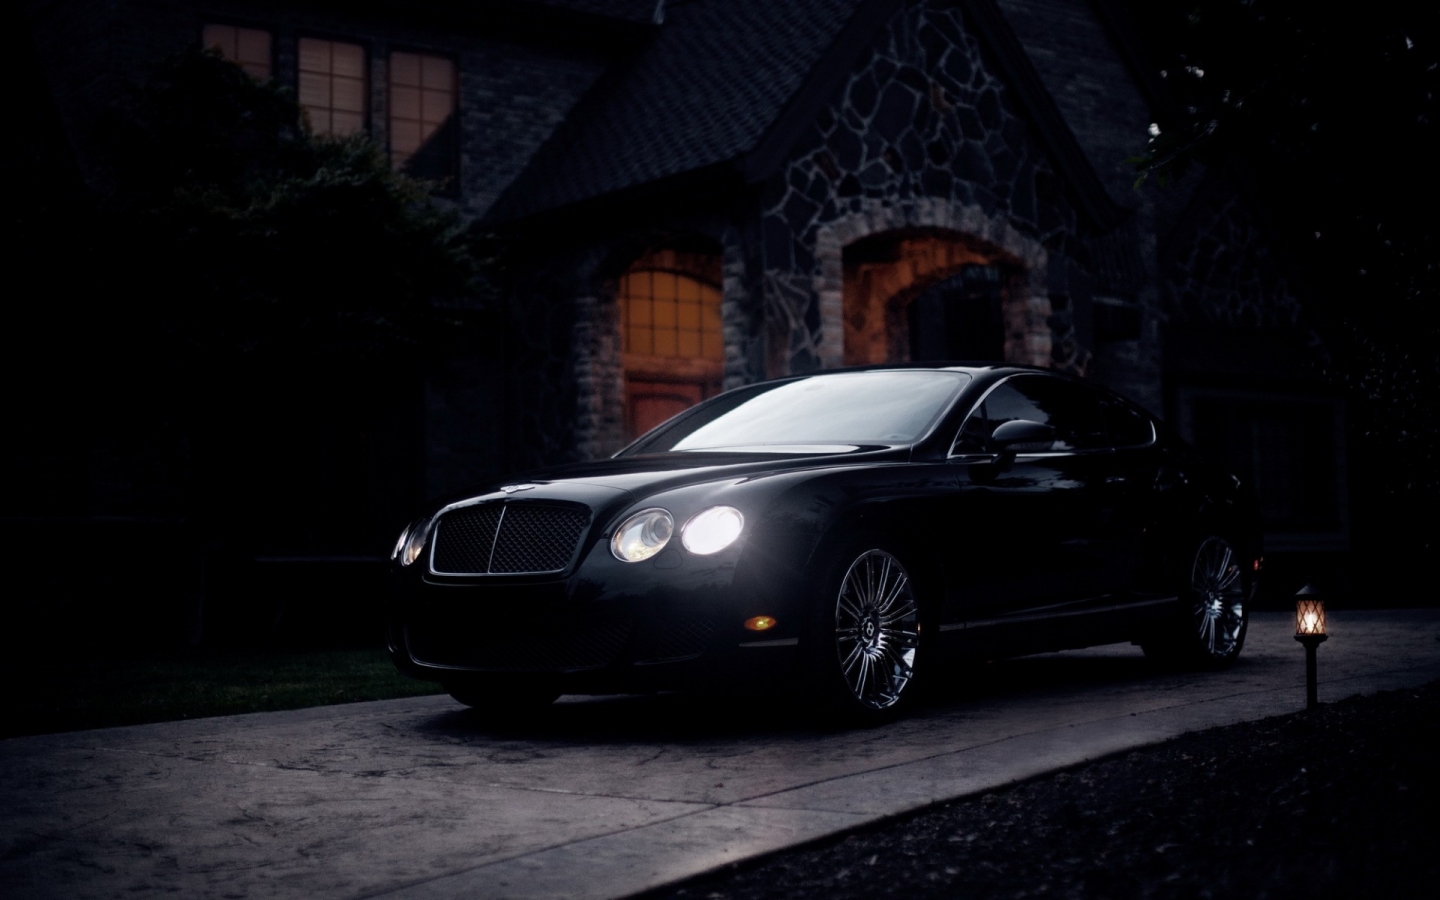 Black Bentley Continental GT for 1440 x 900 widescreen resolution